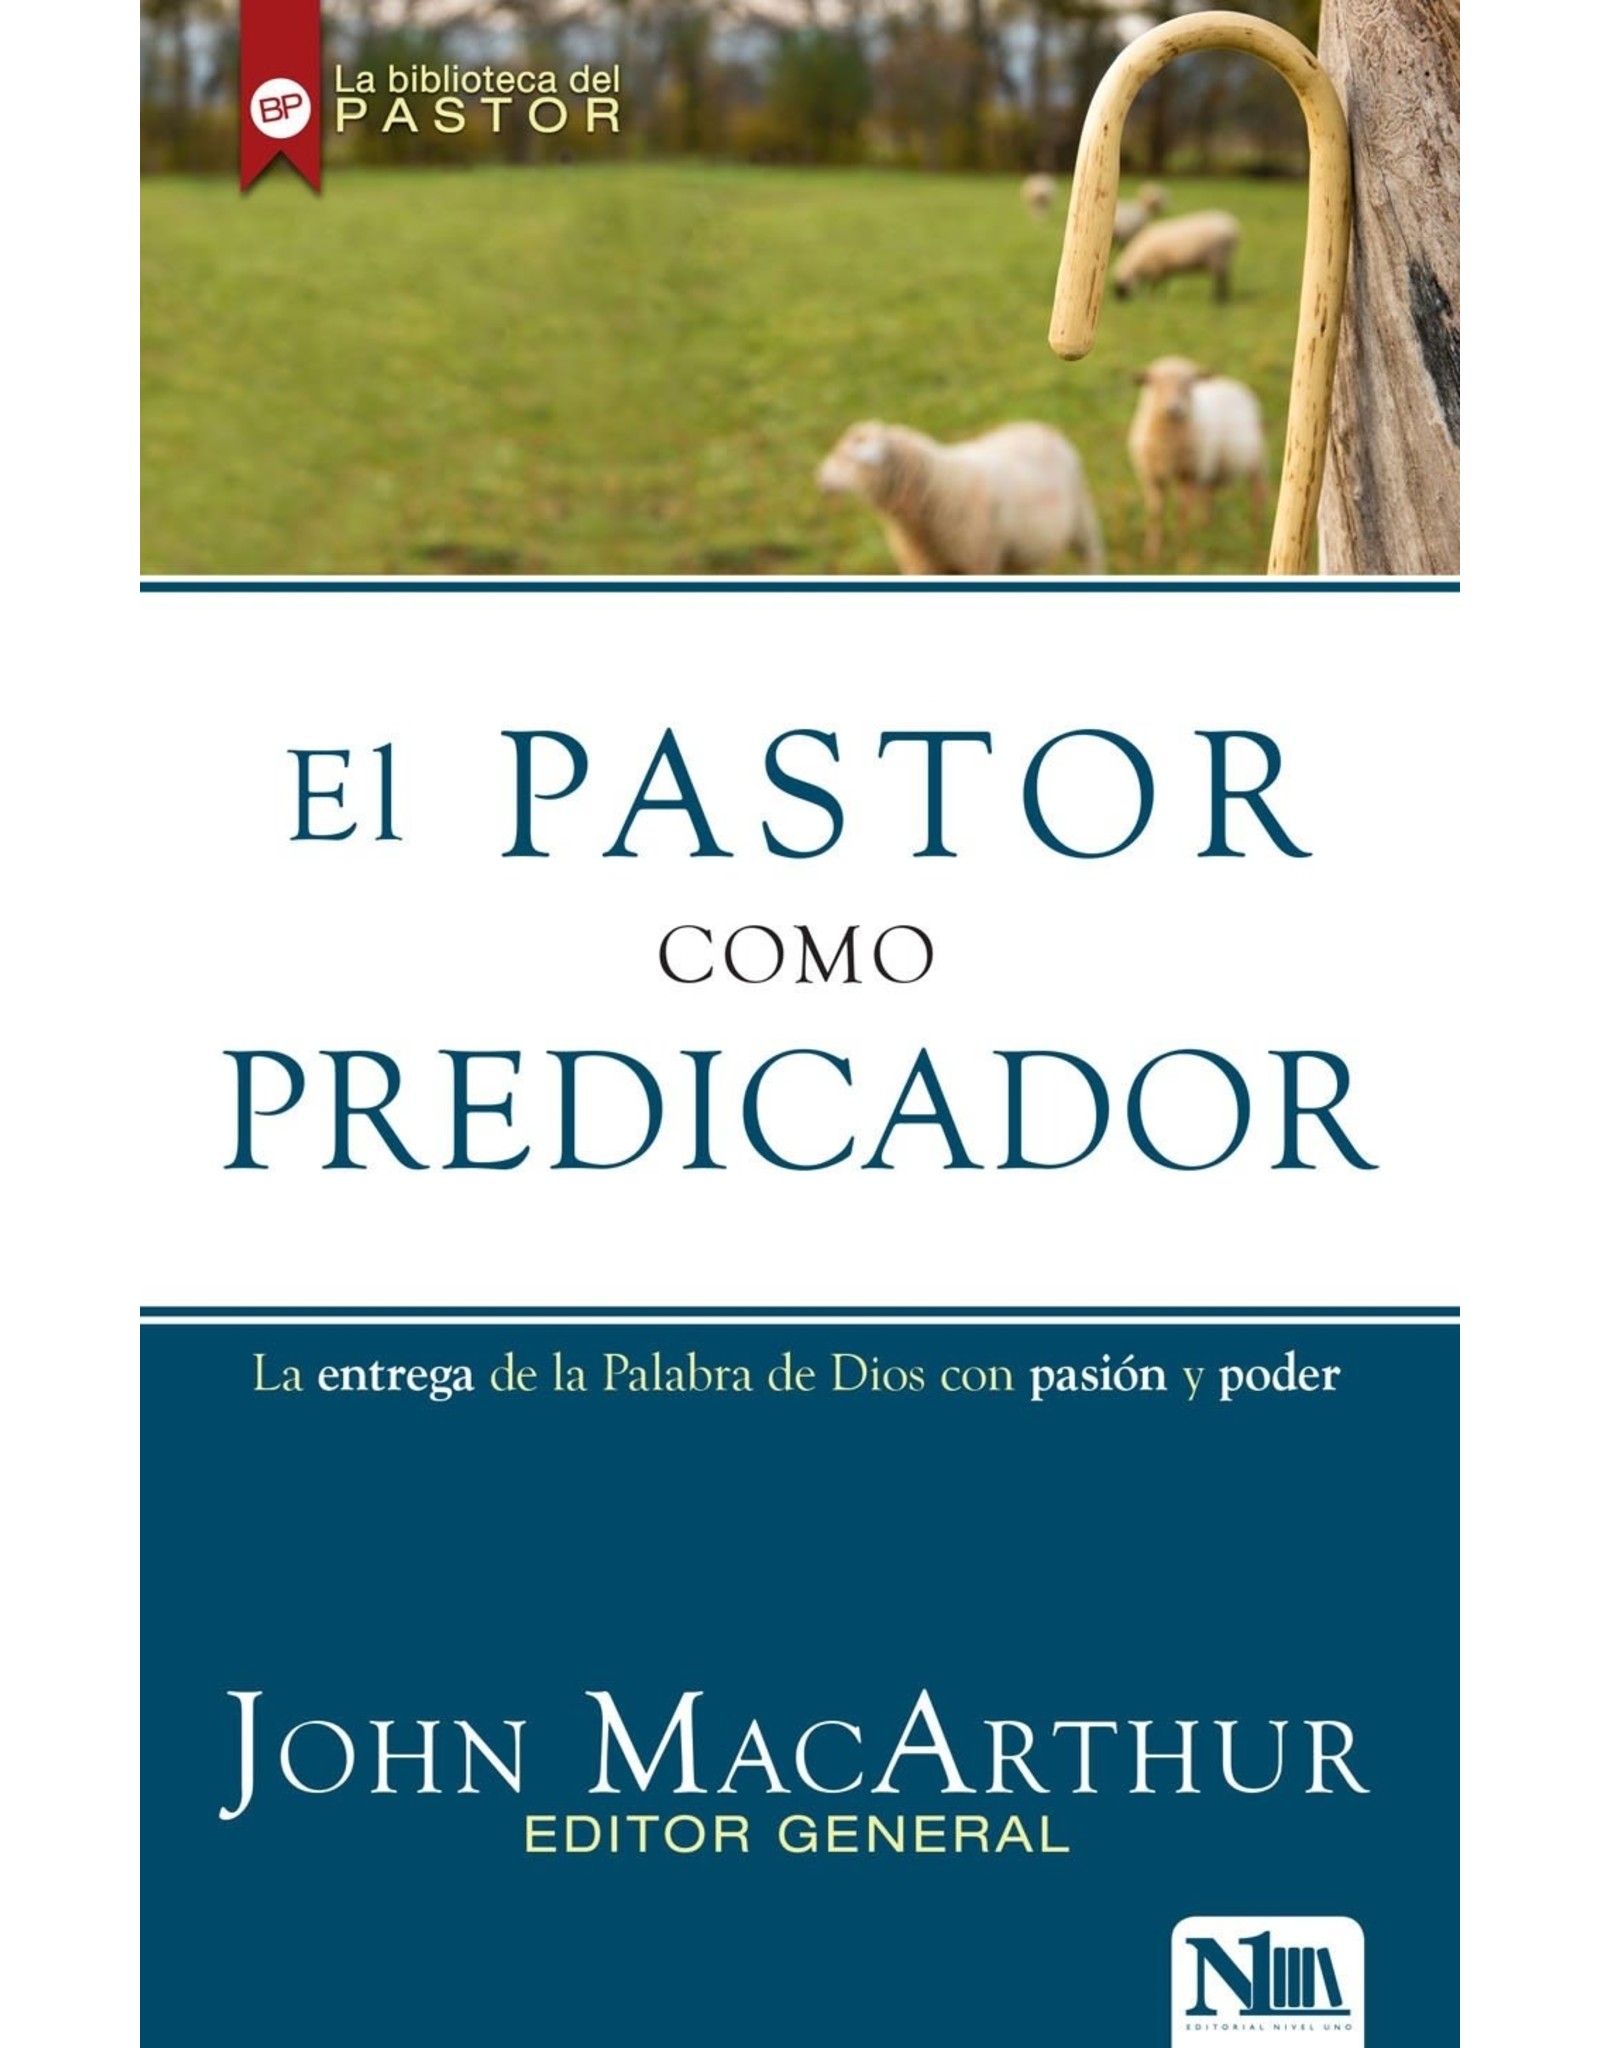 Kregel / Portavoz / Ingram El Pastor Como Predicador (Pastor as Preacher - Spanish)